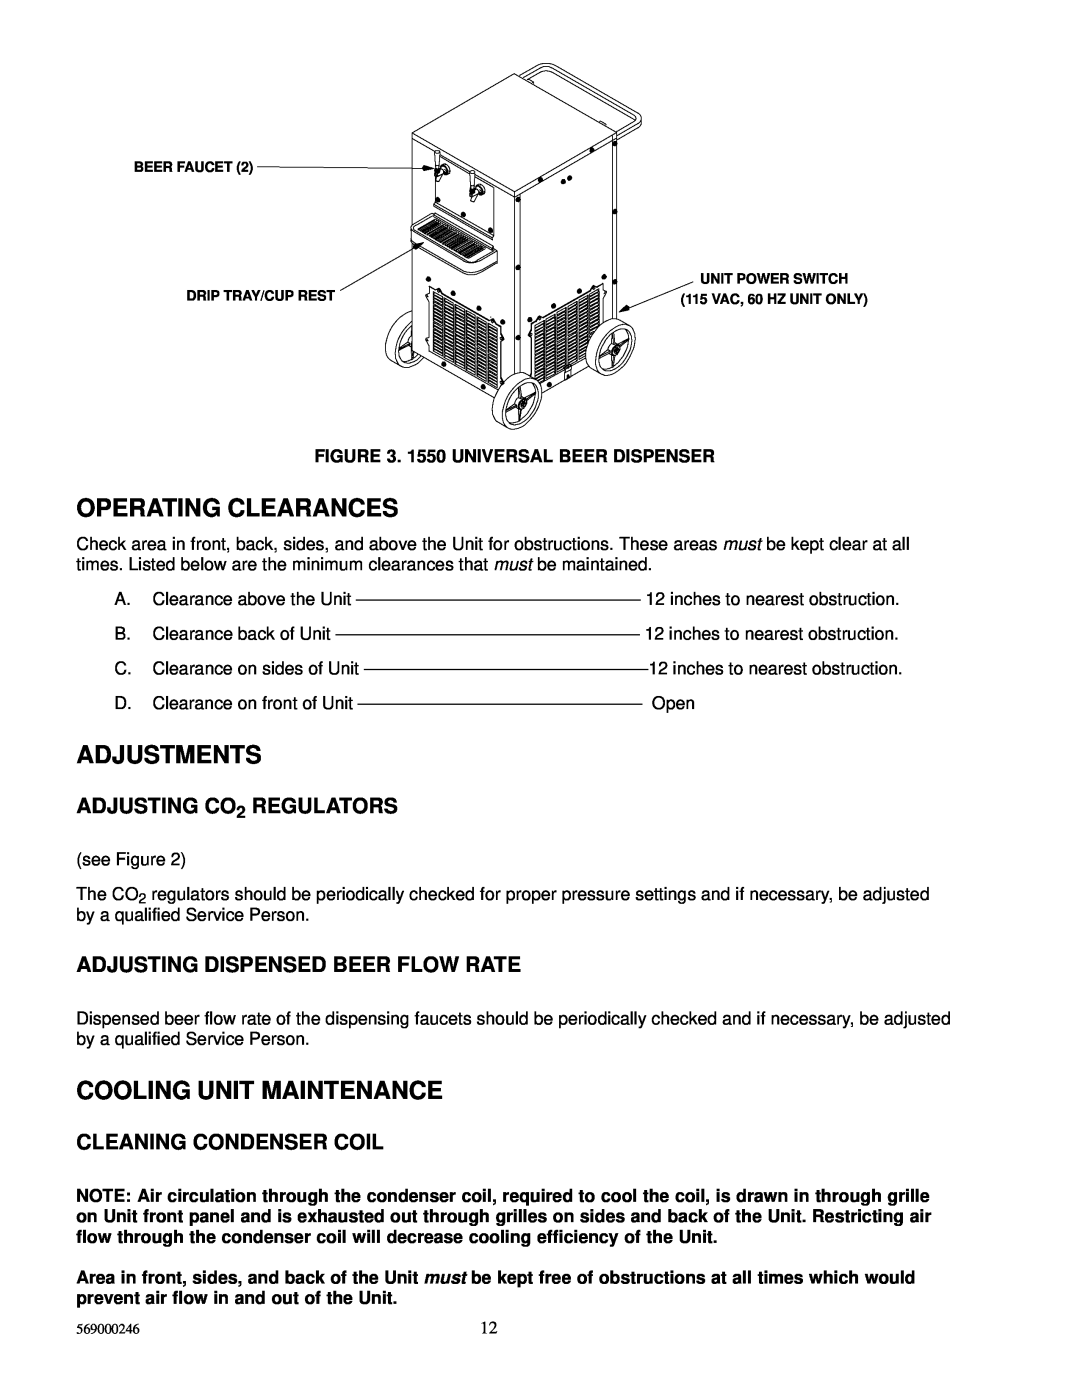 Cornelius 1550 installation manual Operating Clearances, Adjustments, Cooling Unit Maintenance, ADJUSTING CO2 REGULATORS 